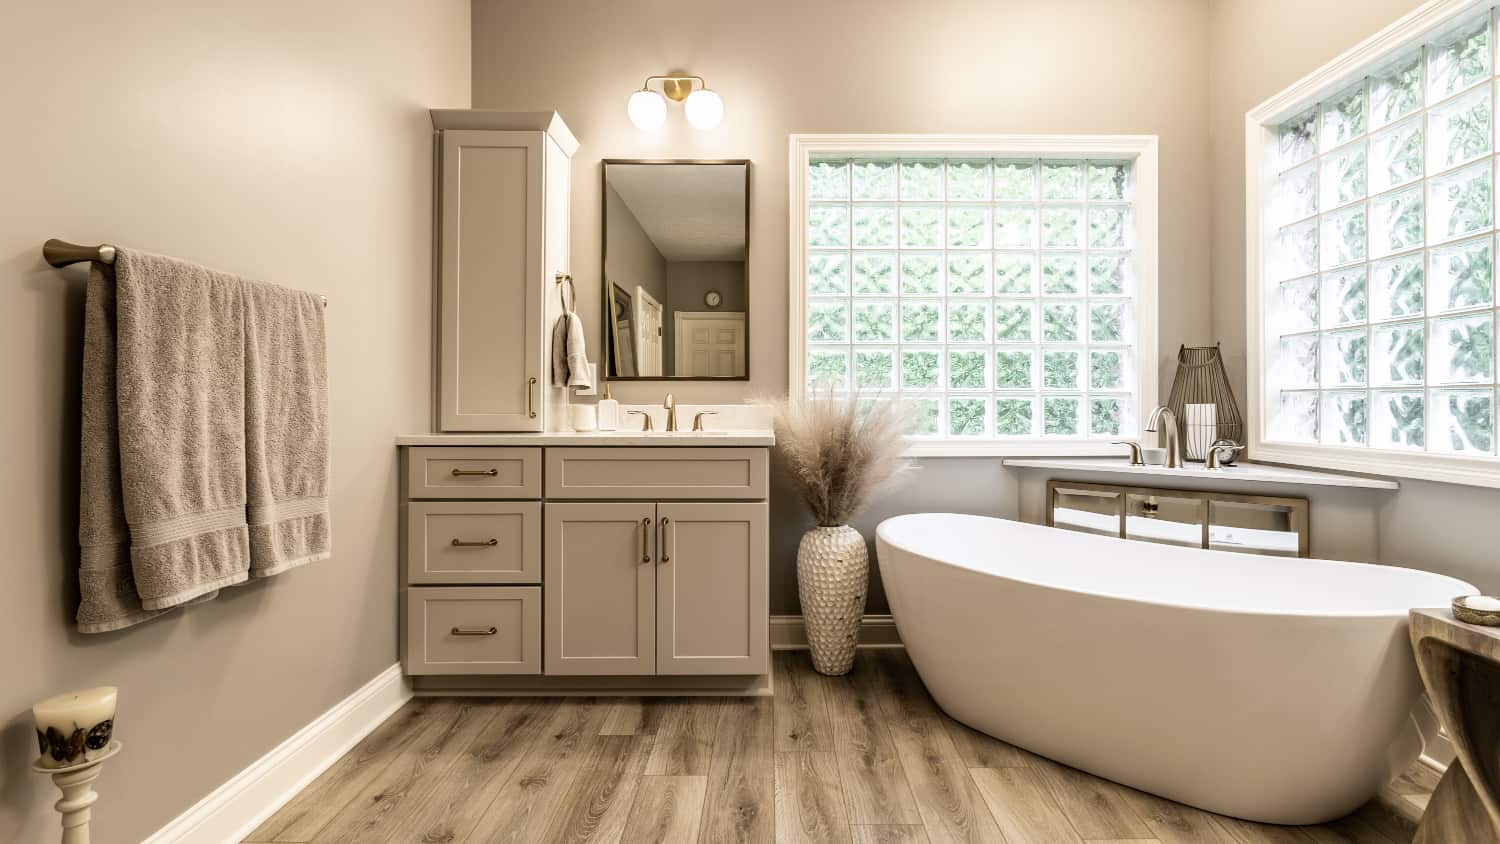 Nicholas Design Build | A modern bathroom with a white tub and hardwood floors.